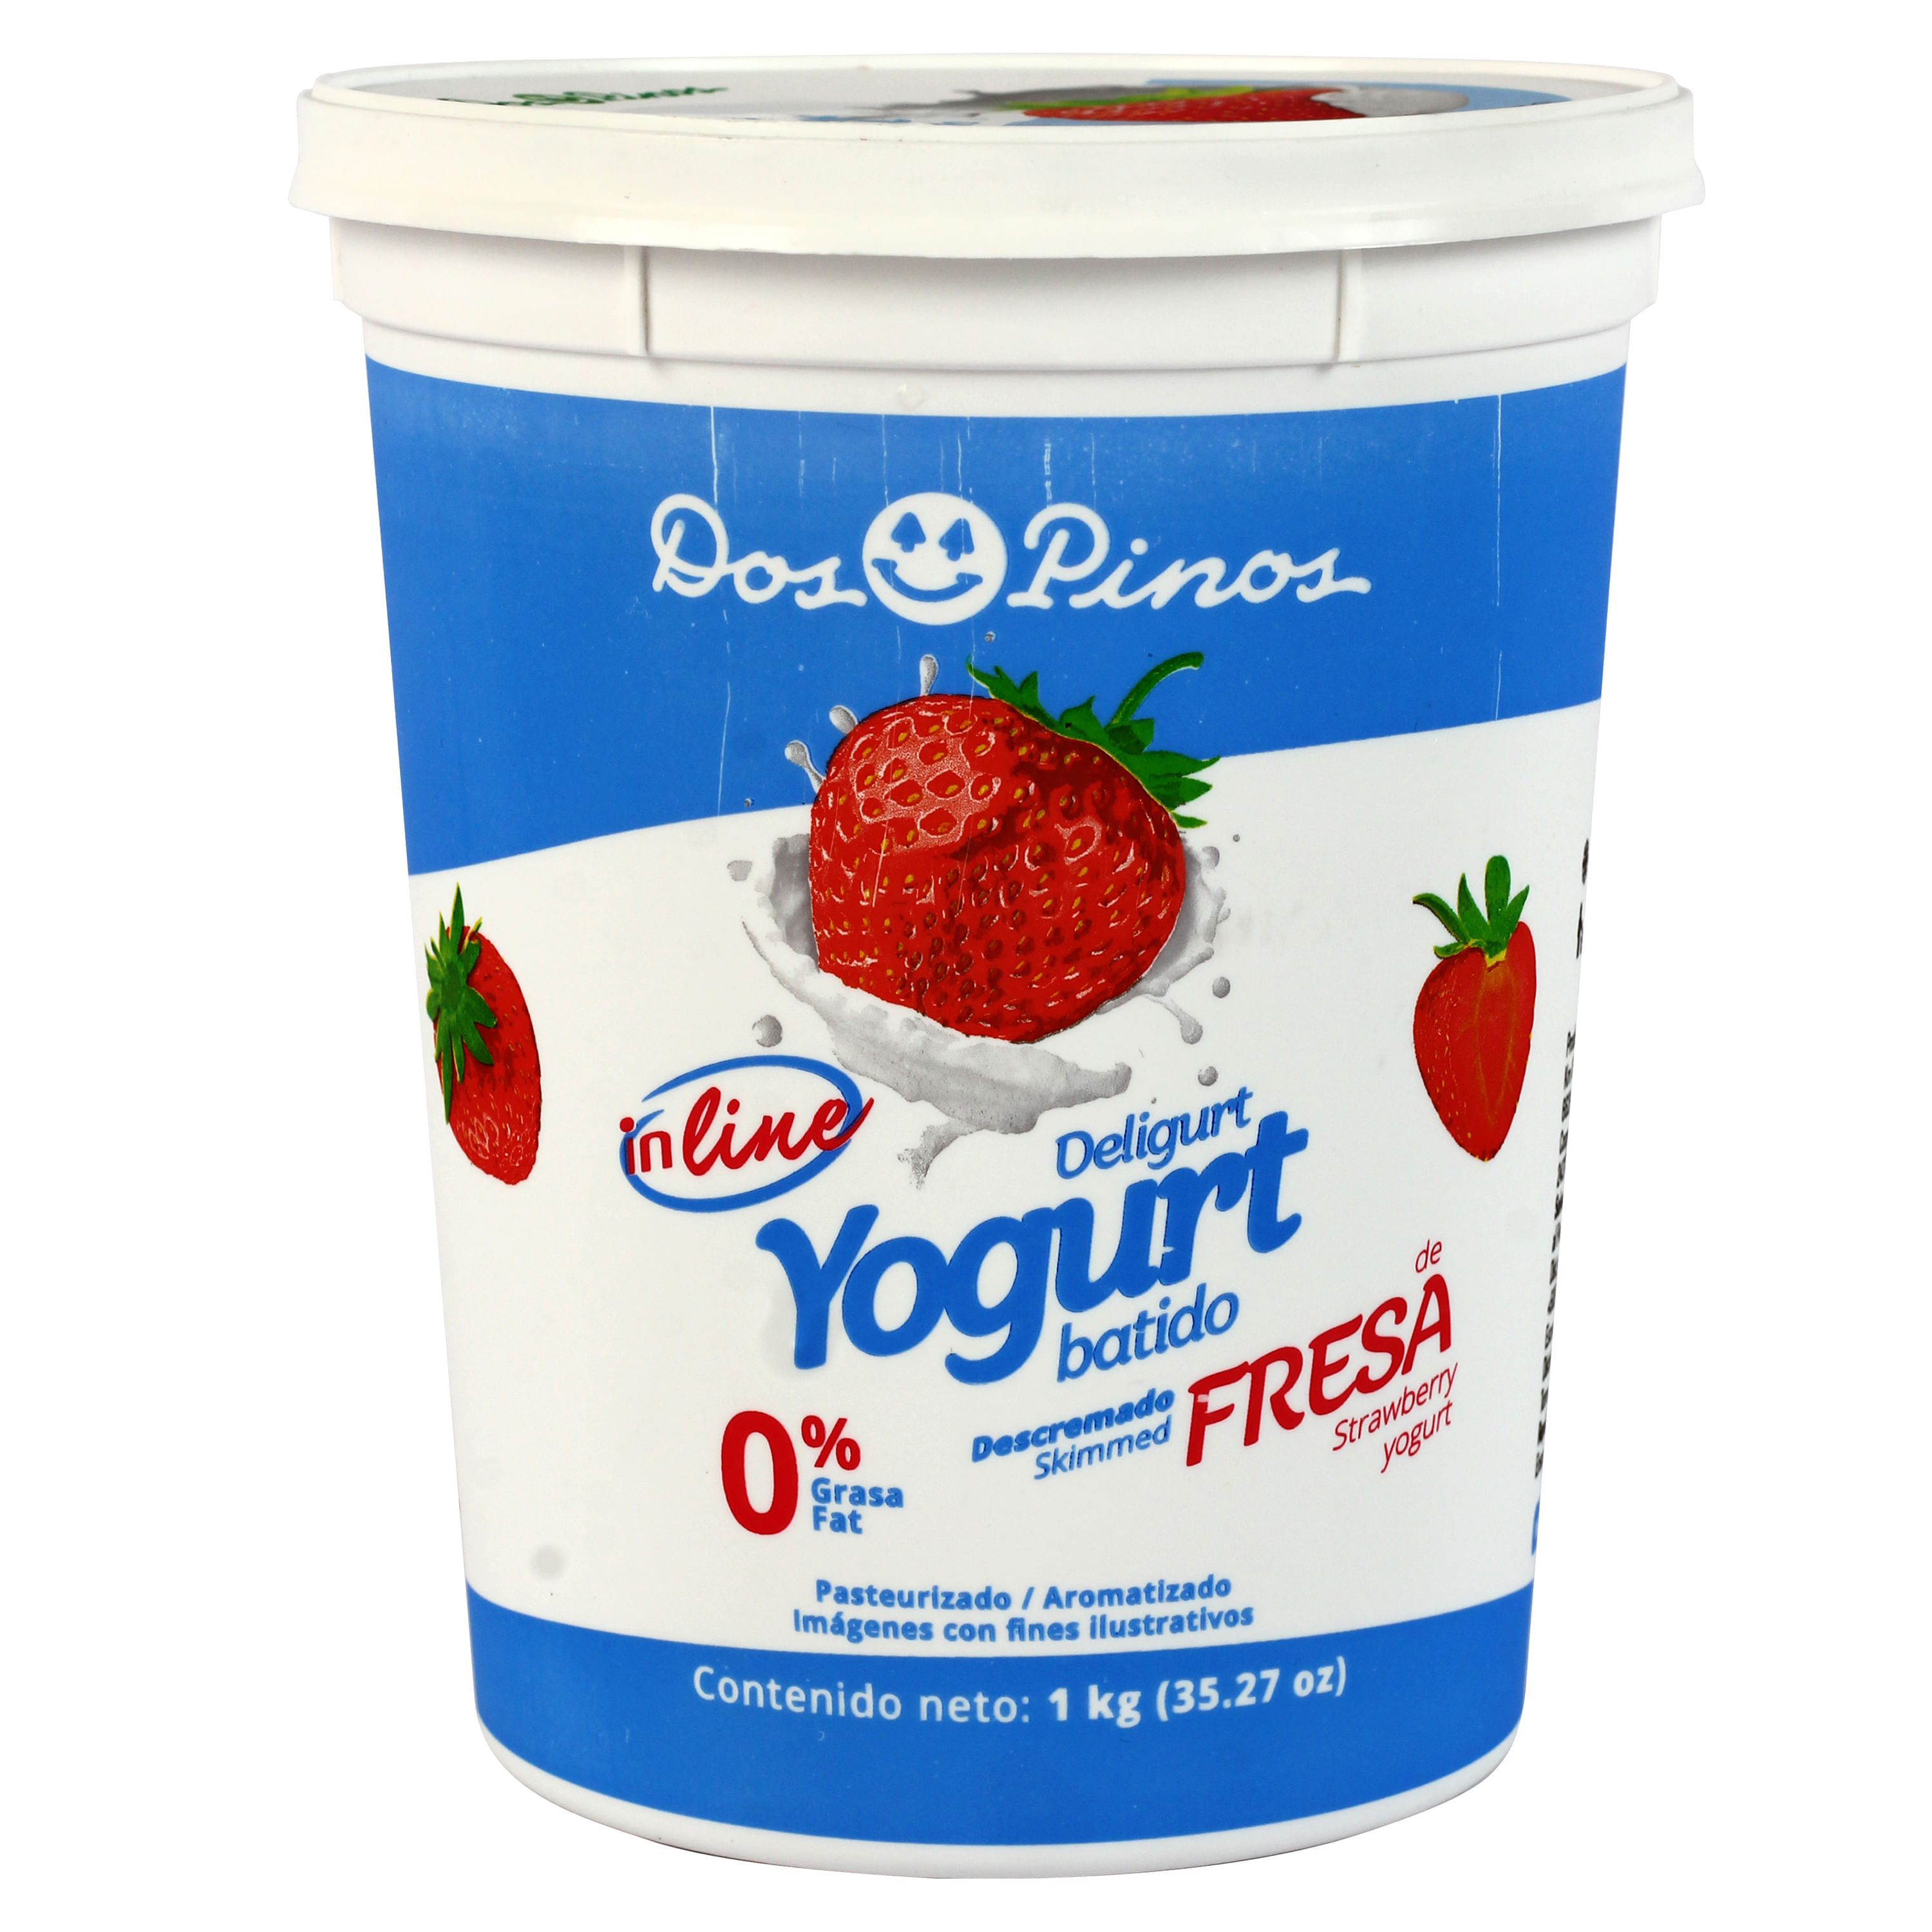 Yogurt-Dos-Pinos-Batido-Fresa-Inline-1kg-1-32553